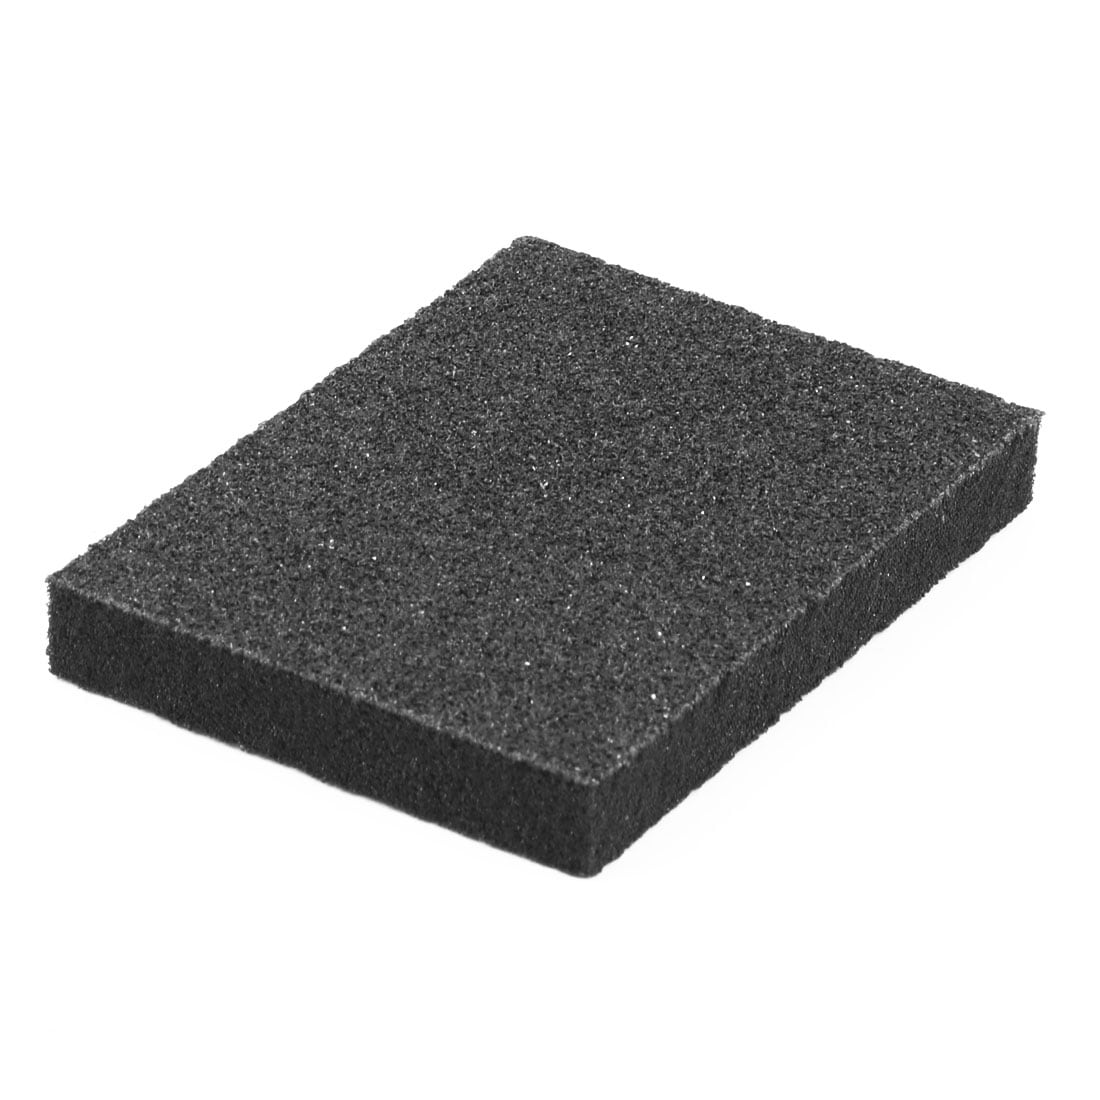 black cleaning sponge